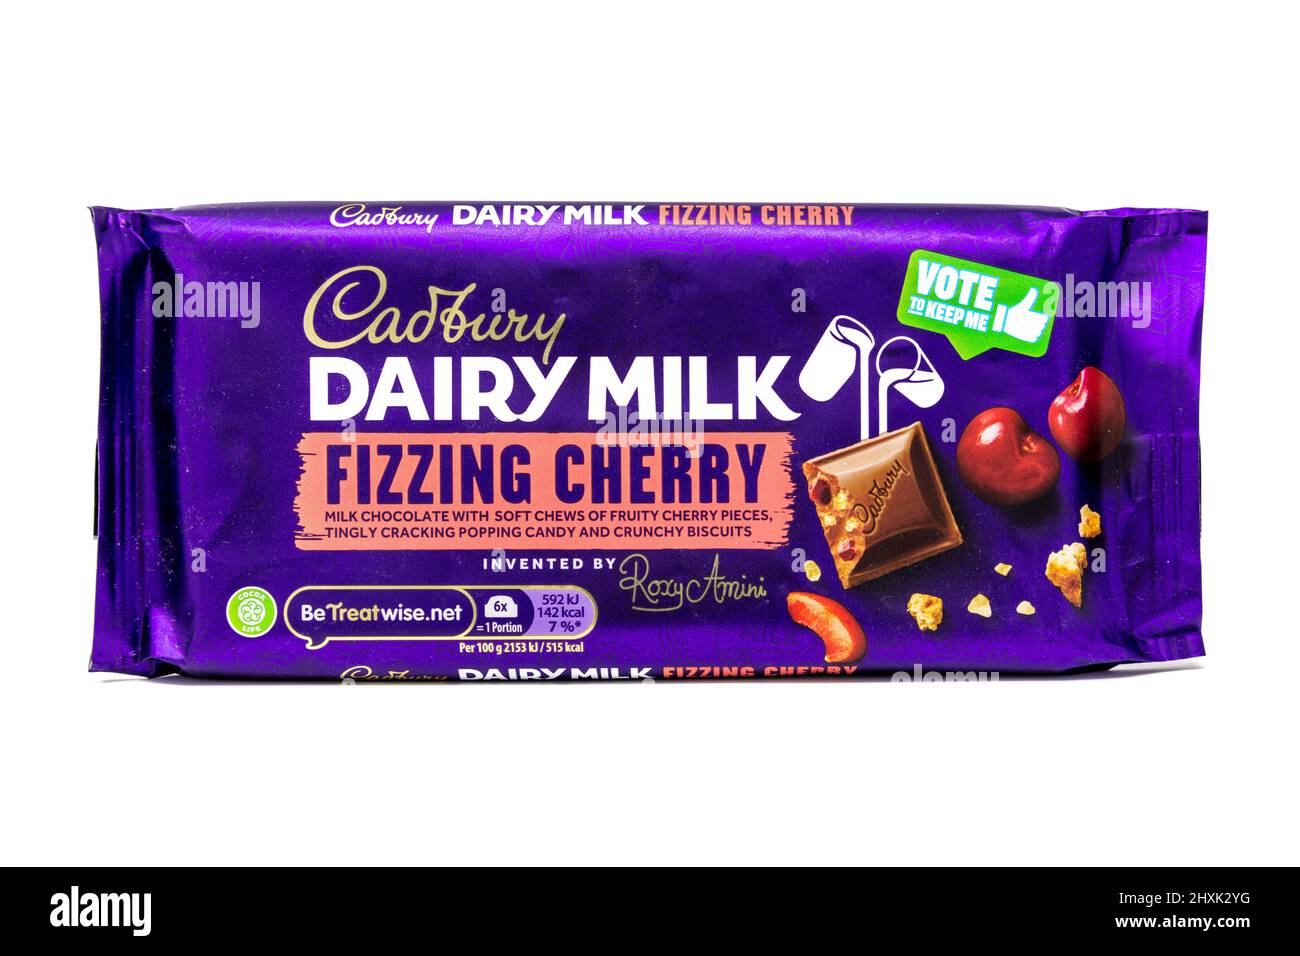 Cadbury Dairy Milk Fizzing Cherry Stock Photo